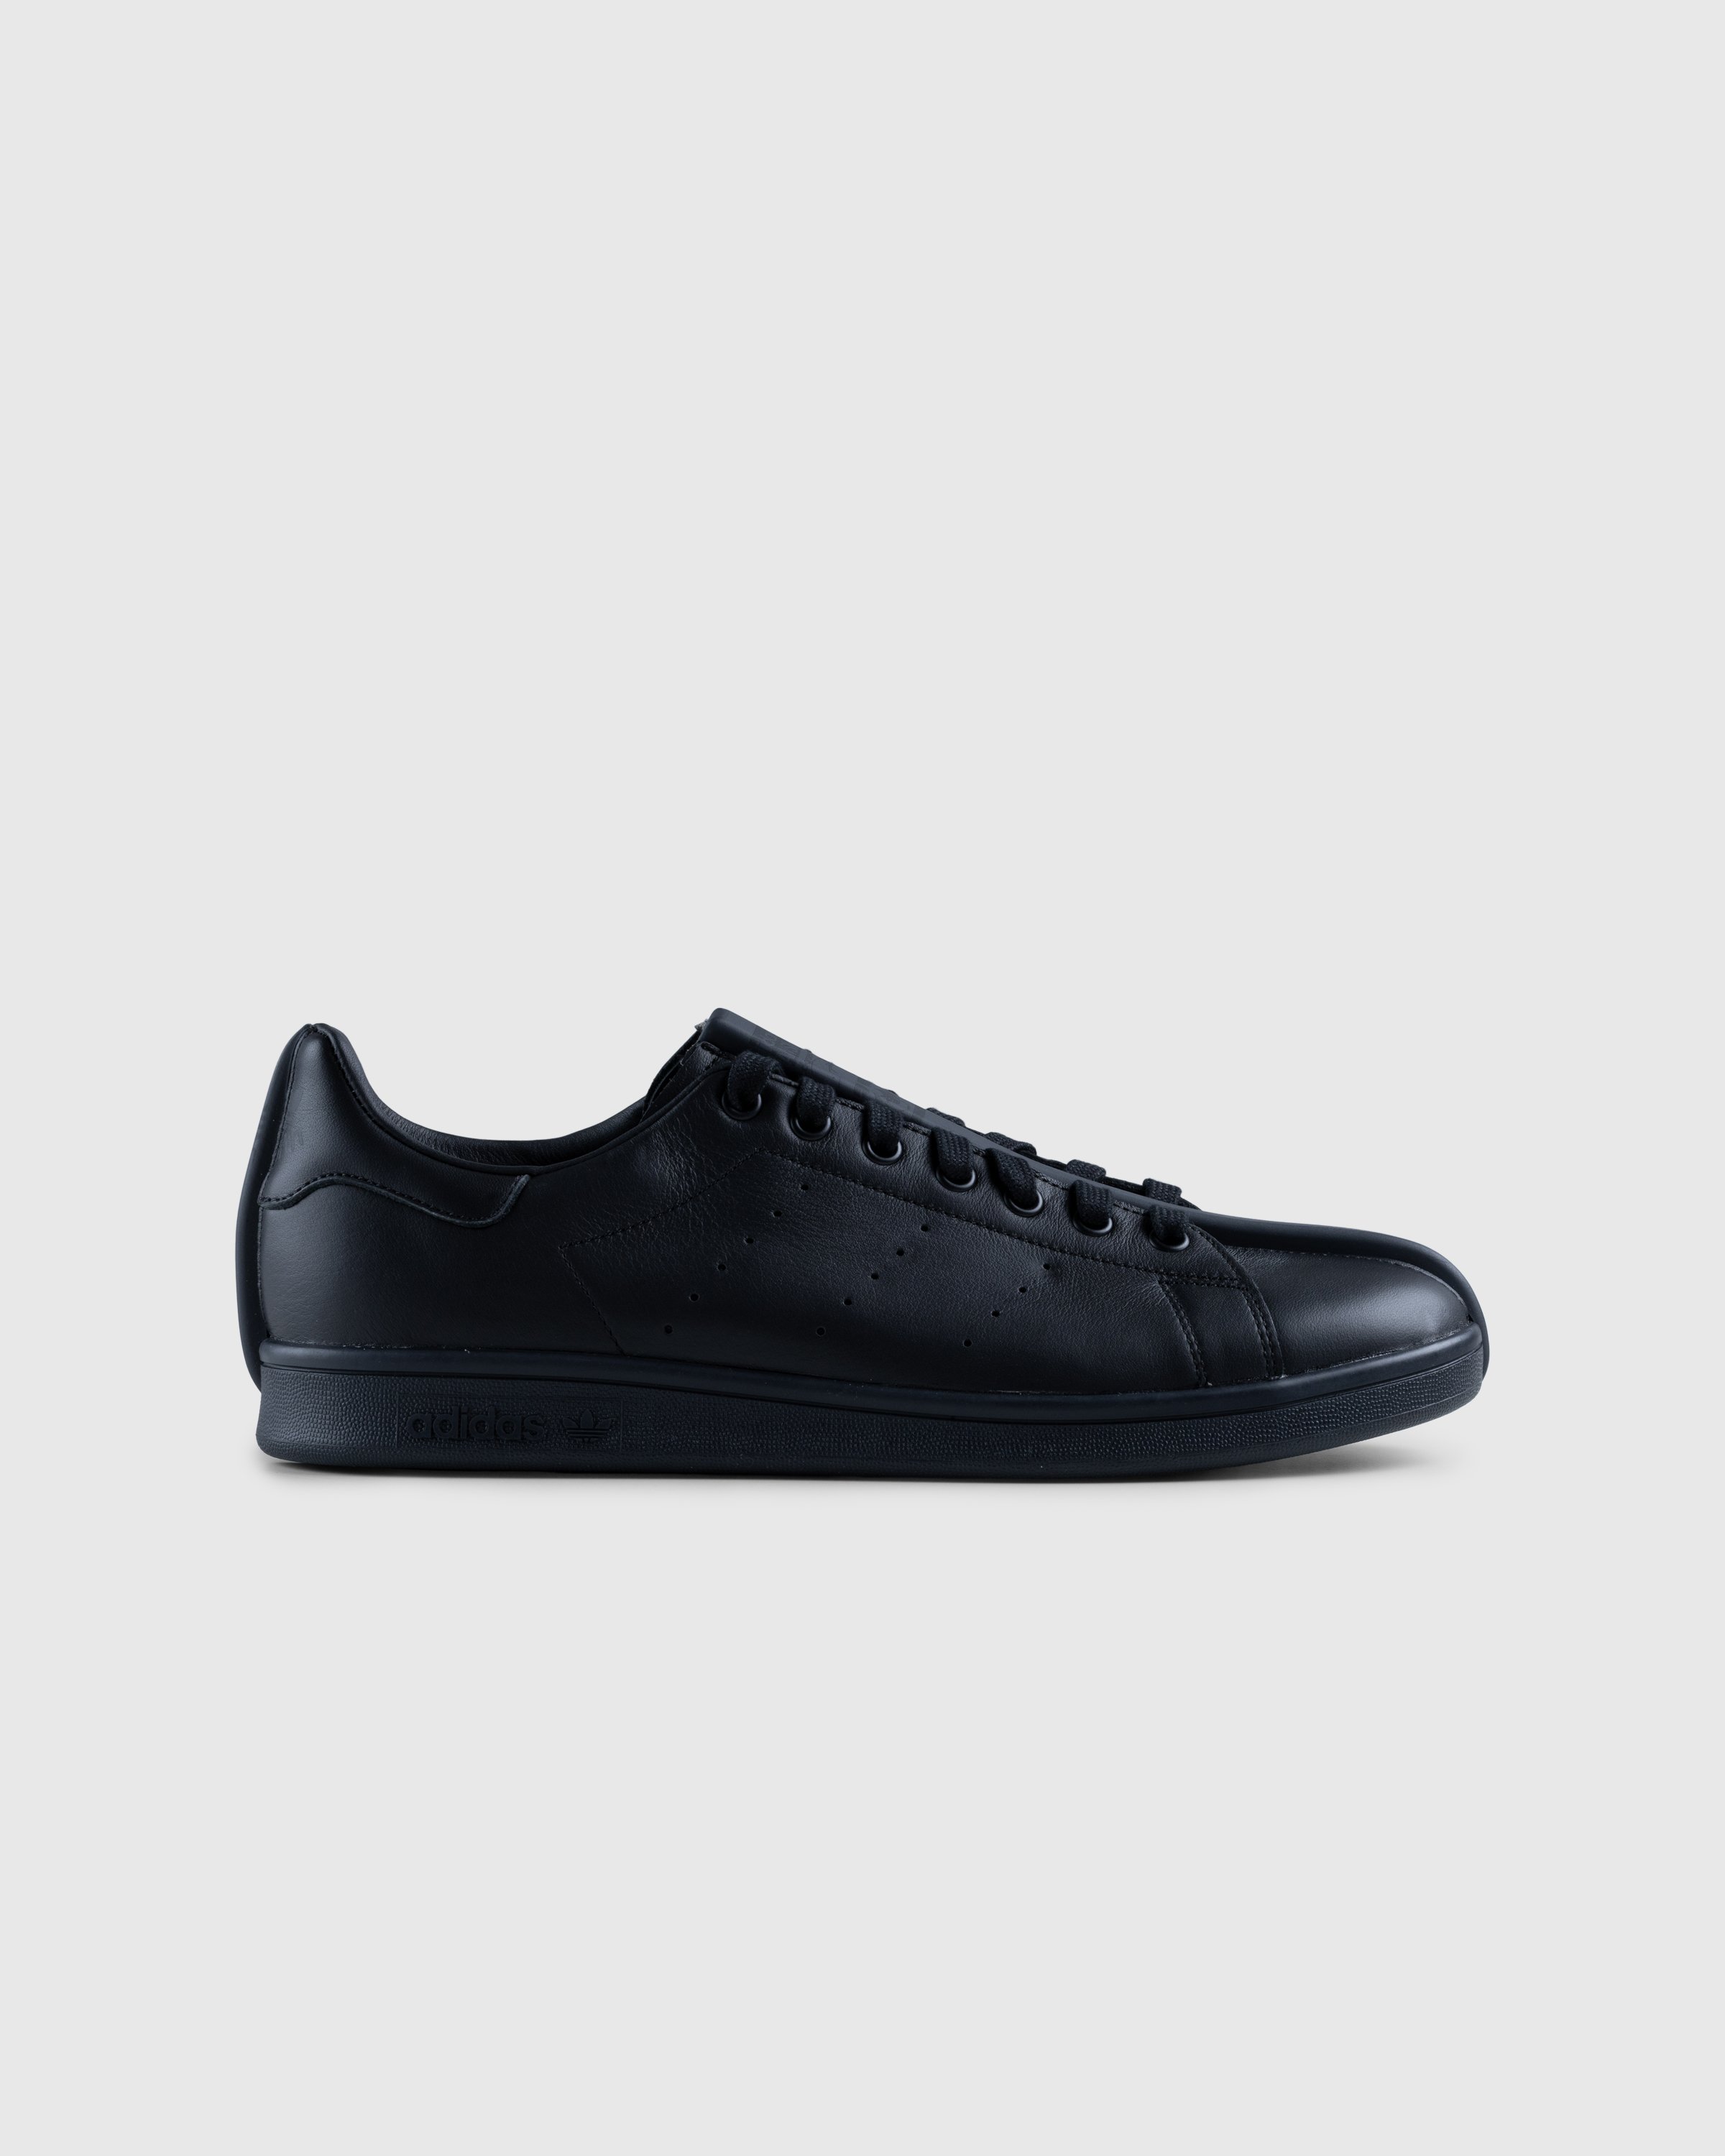 Craig Green x Adidas - CG Split Stan Smith core black/core black/granite - Footwear - Black - Image 1